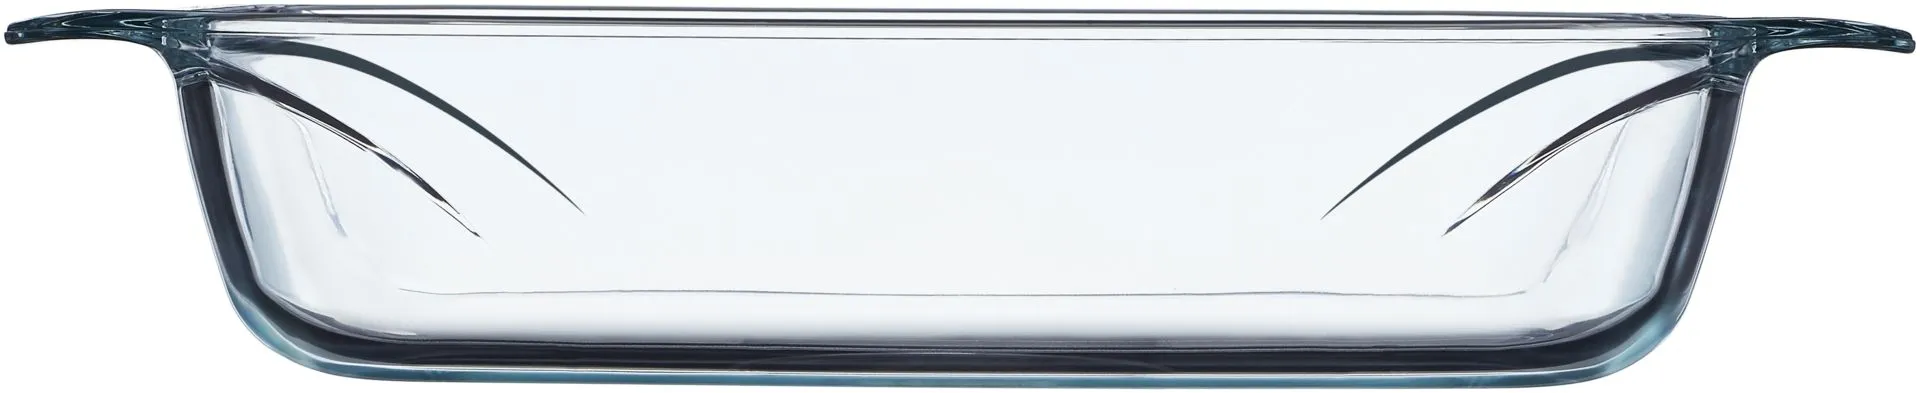 Pyrex lasivuokasetti Irresistible 27 x 17 x 6 cm + 35 x 23 x 7 cm - 3